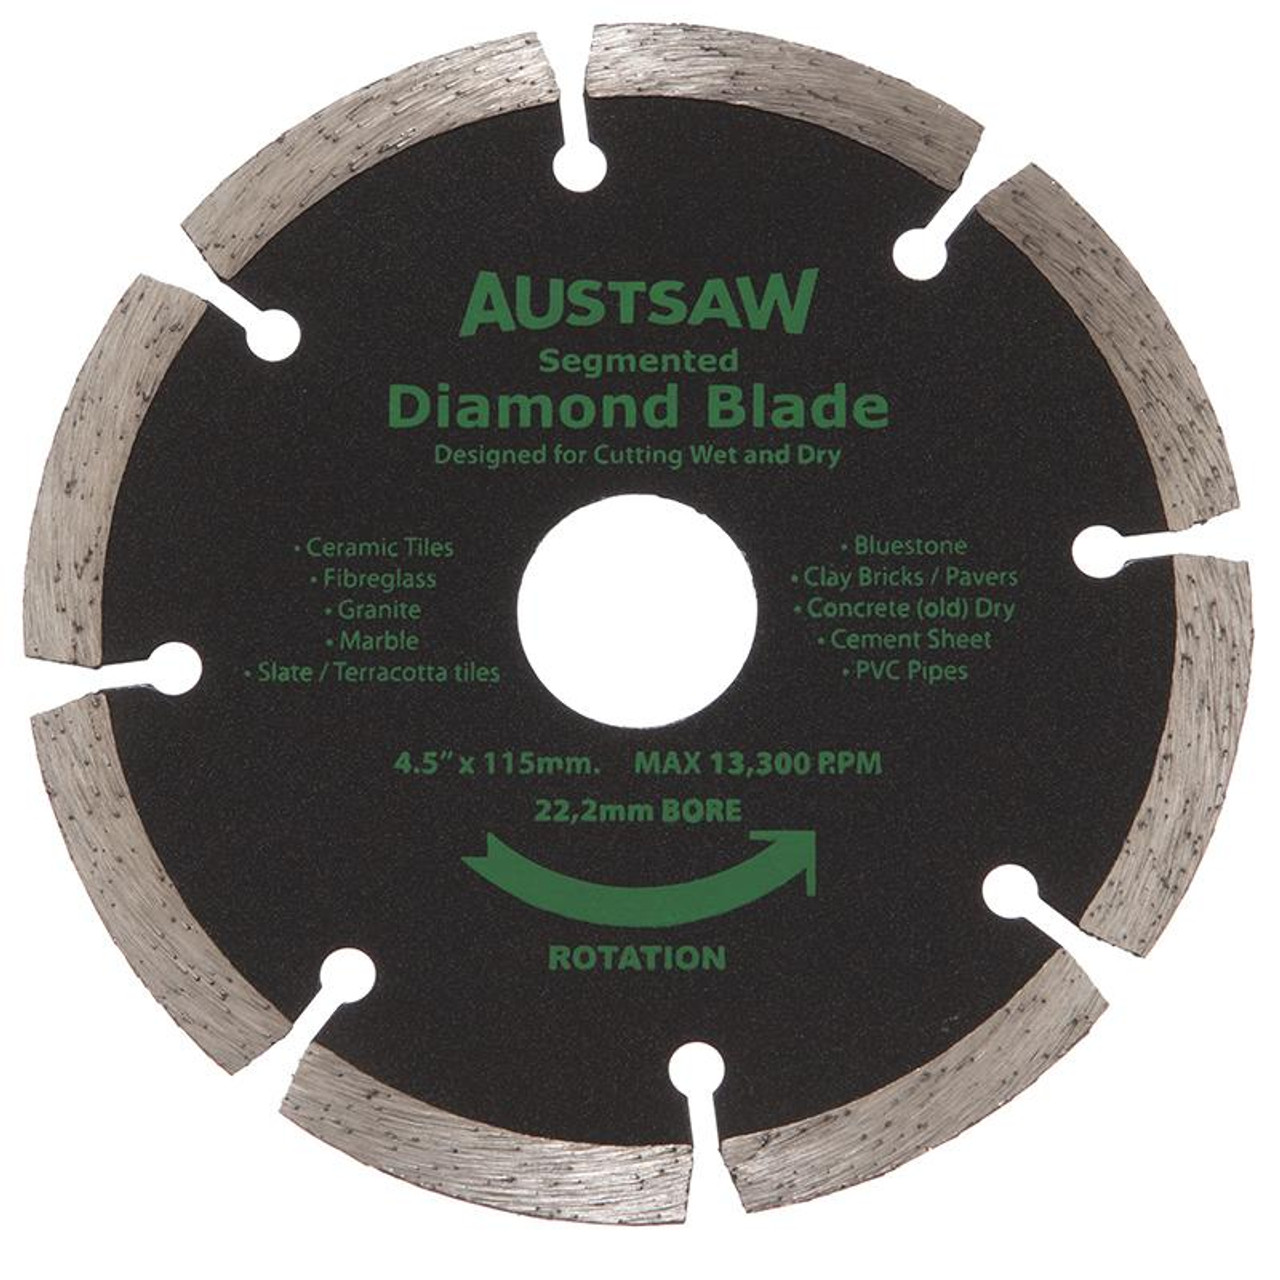 Austsaw - 115Mm (4.5In) Diamond Blade Segmented - 22.2Mm Bore - Segmented